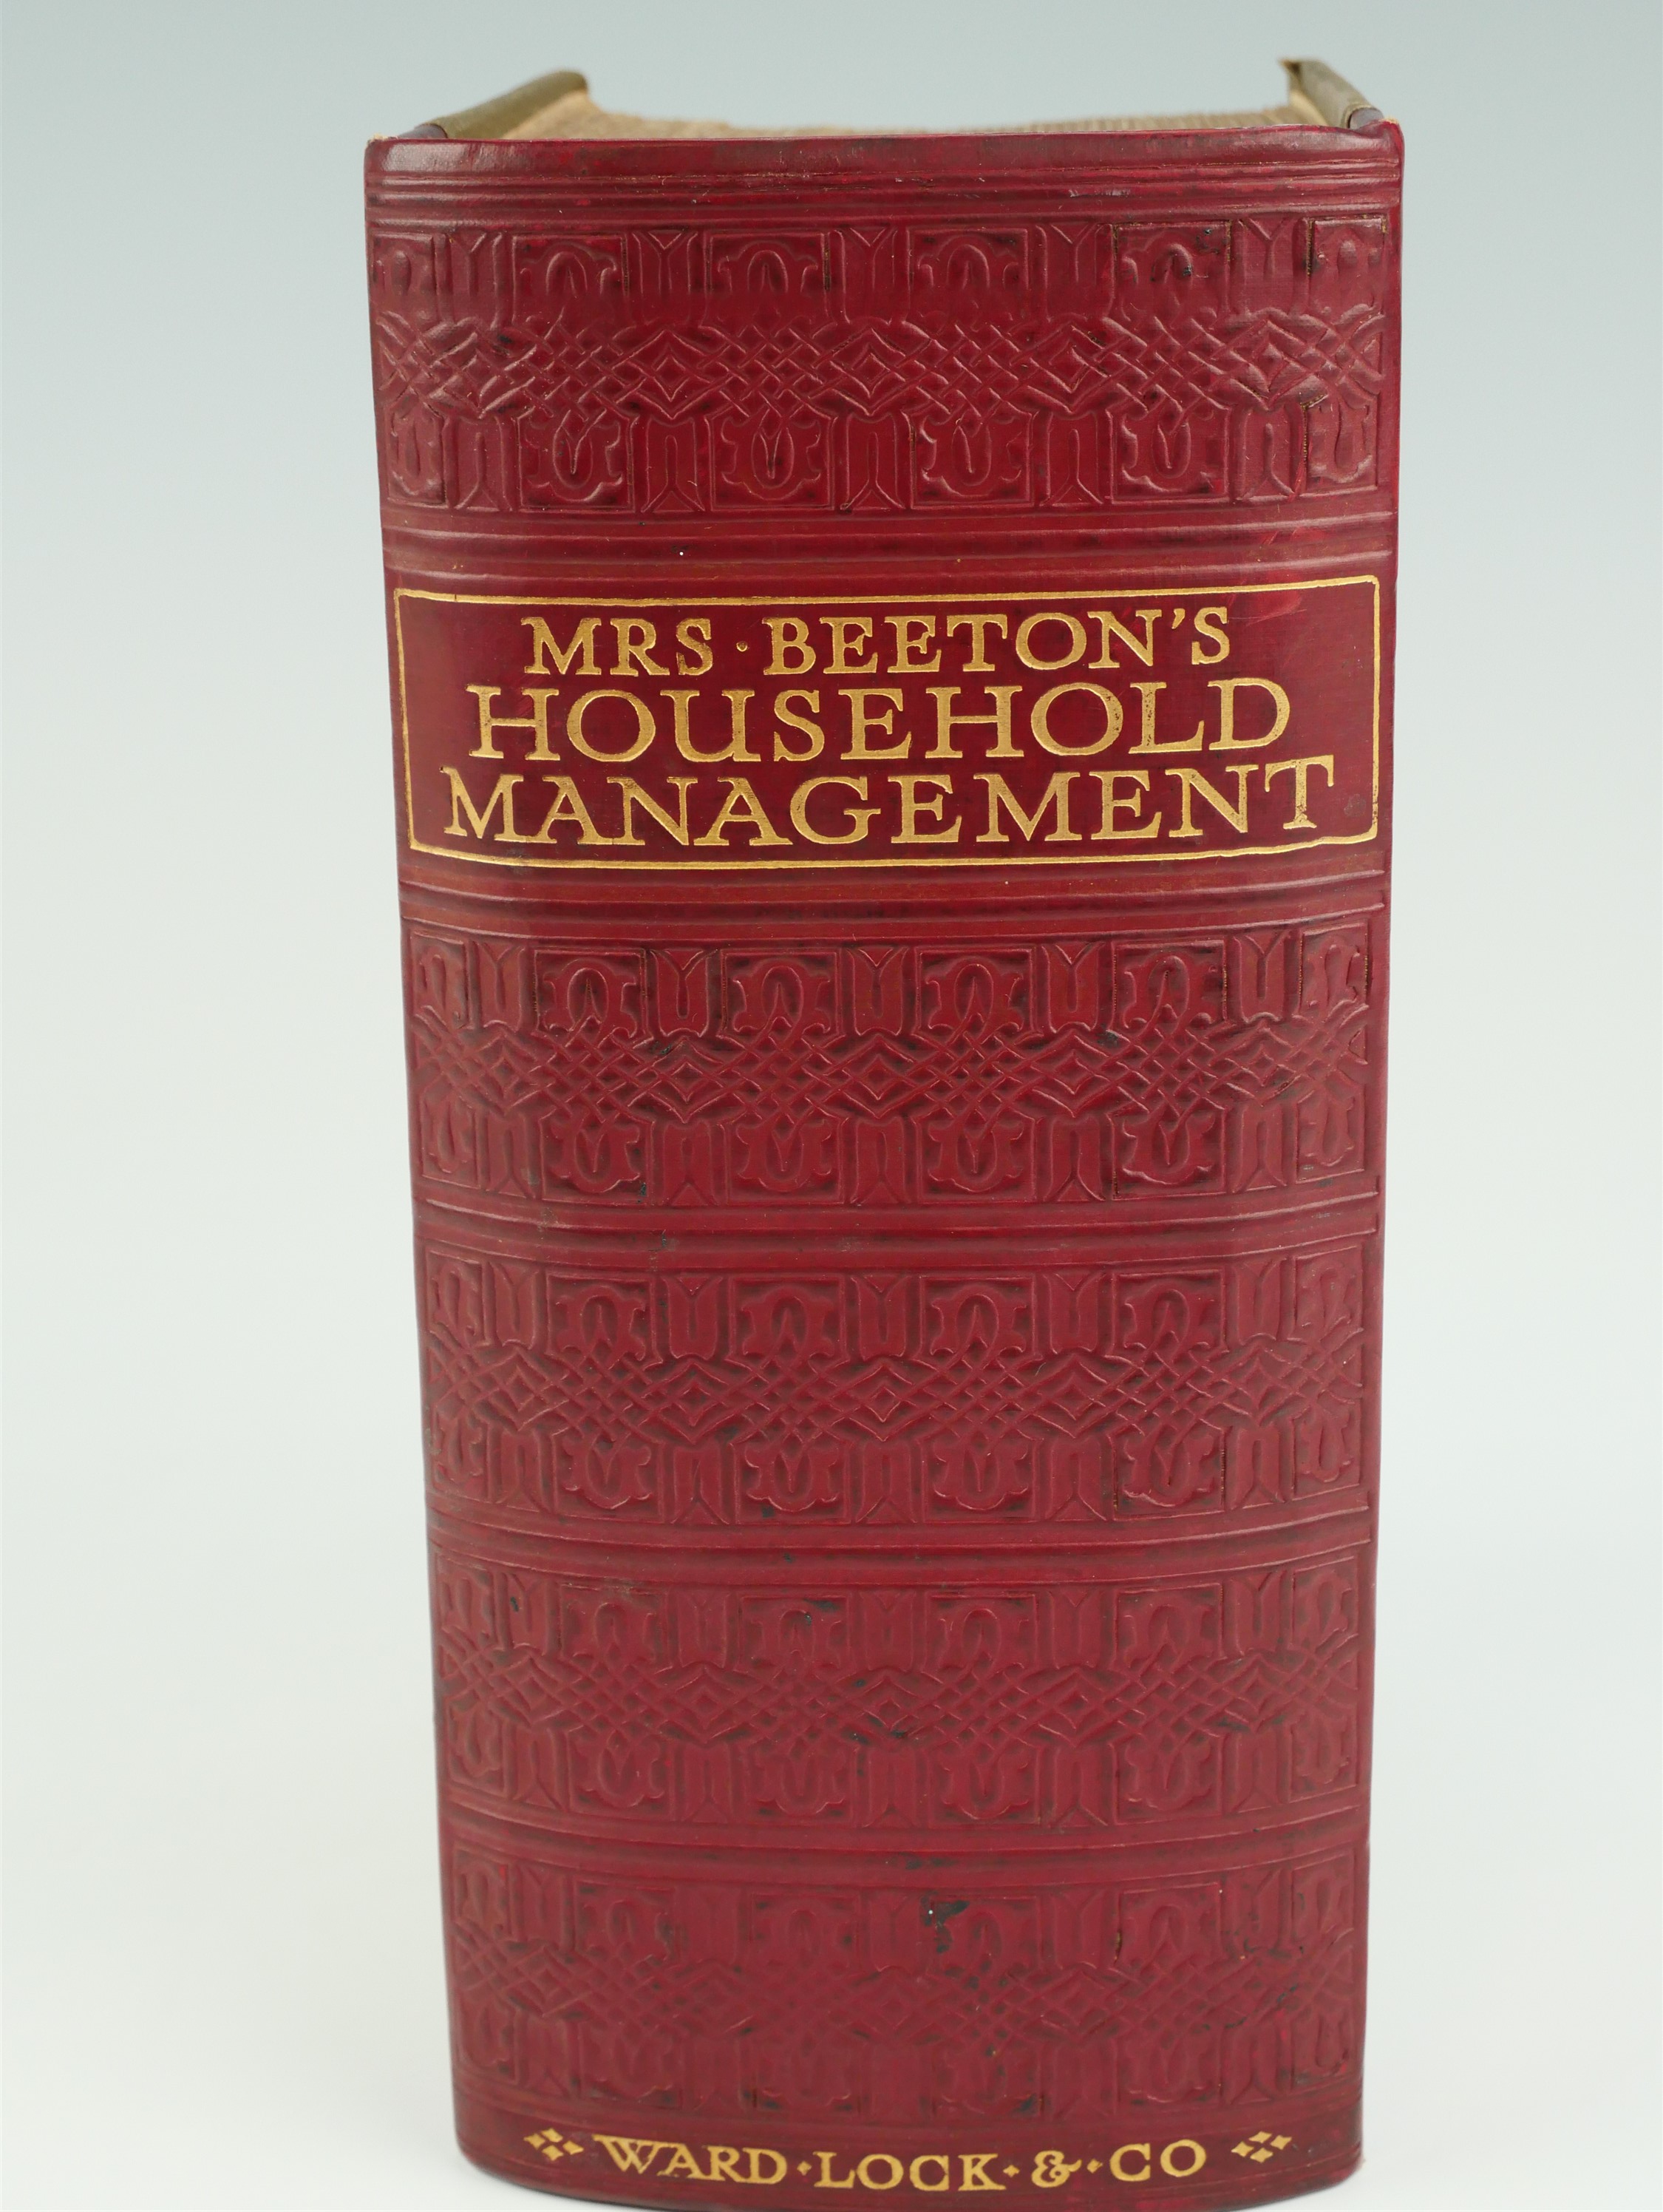 Mrs Beeton's Household Management, New Edition, Ward, Lock & Co Ltd, London, 1923 - Image 2 of 2